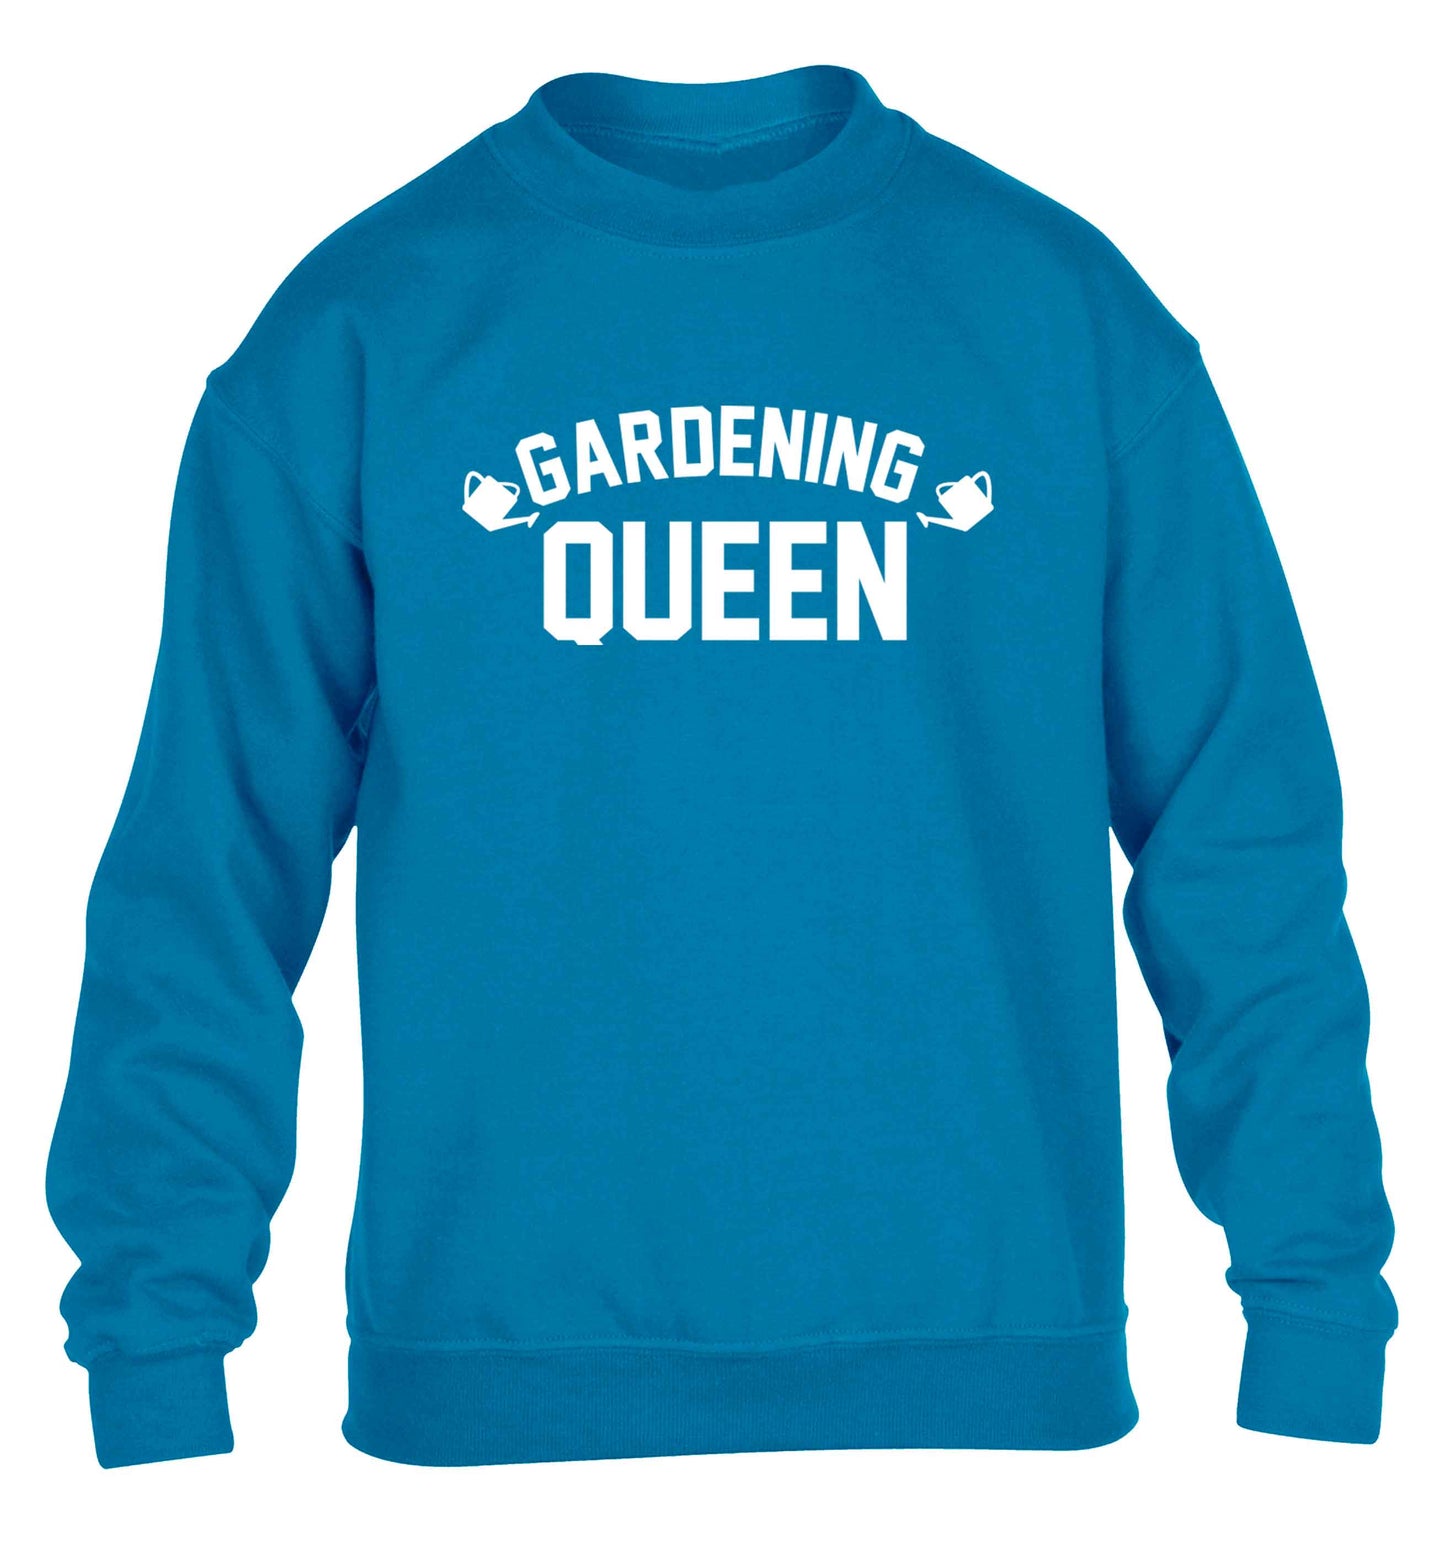 Gardening queen children's blue sweater 12-13 Years